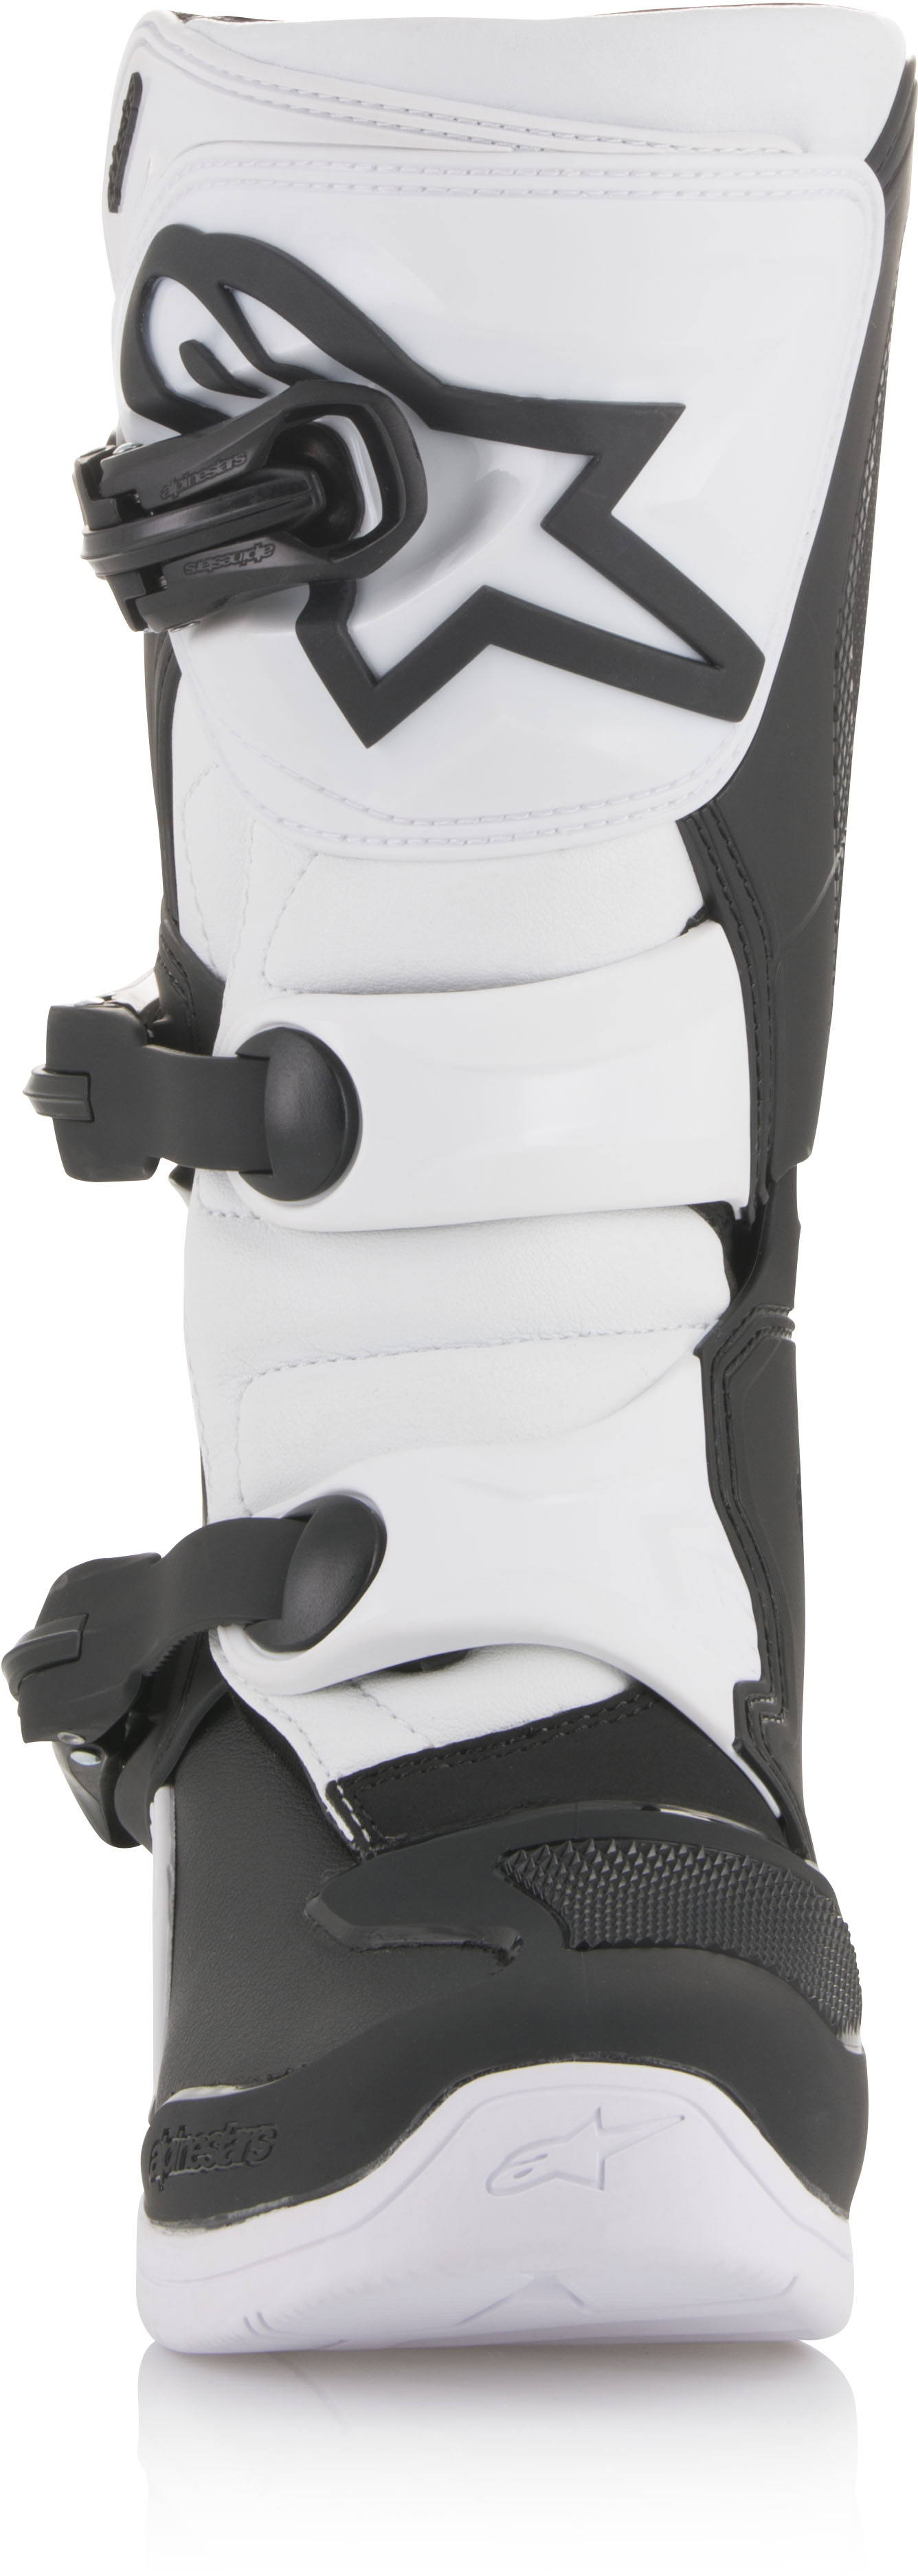 Tech 3S Boots Black/White Size 4 - Click Image to Close